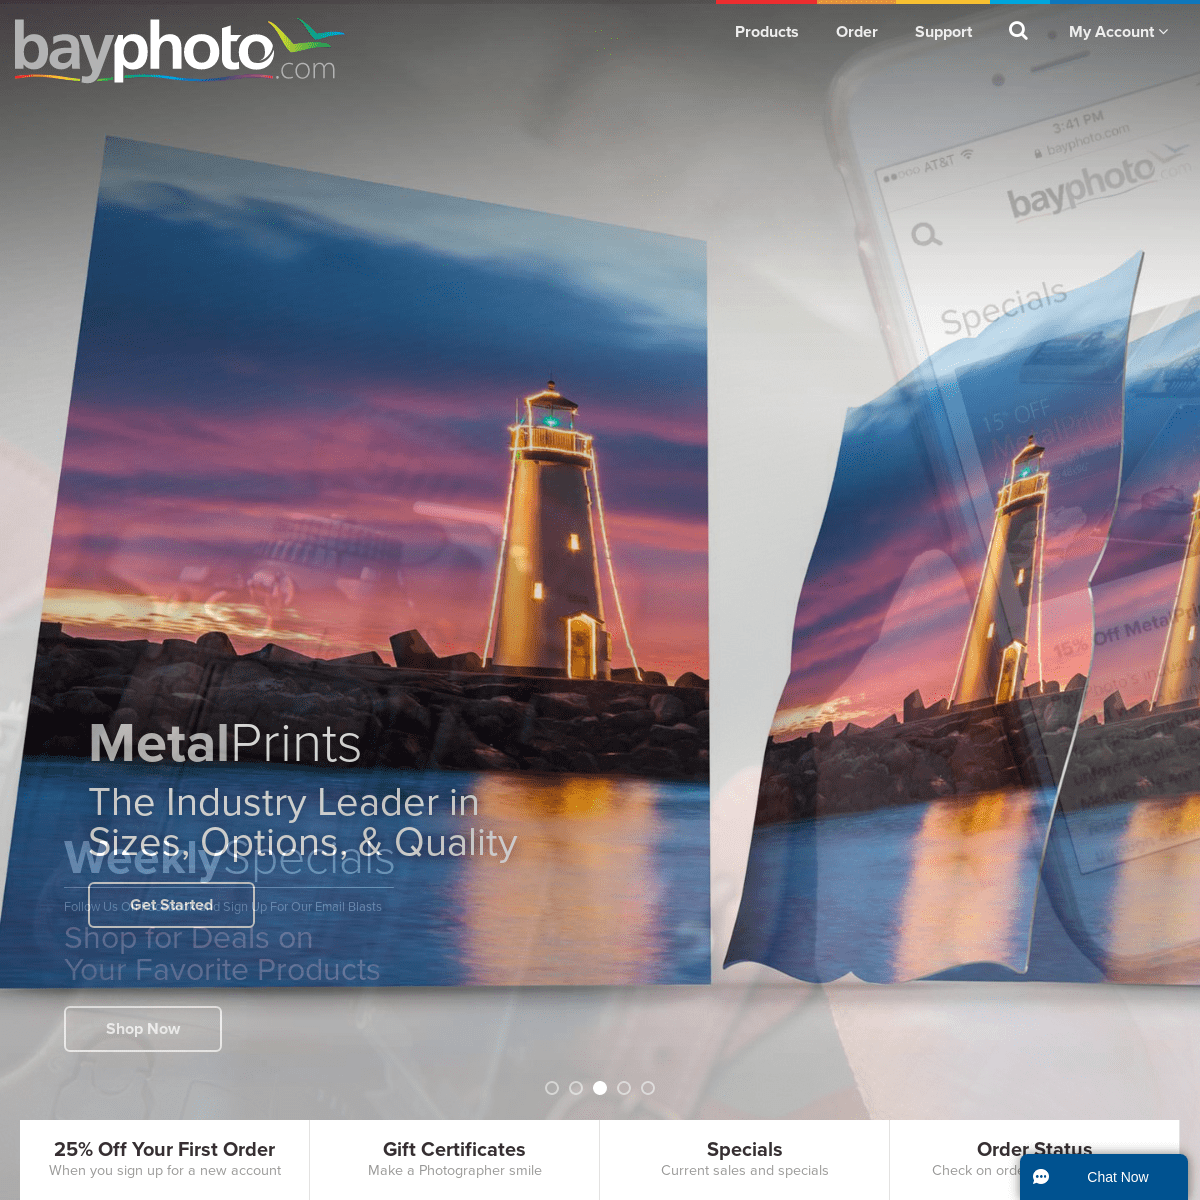 A complete backup of bayphoto.com